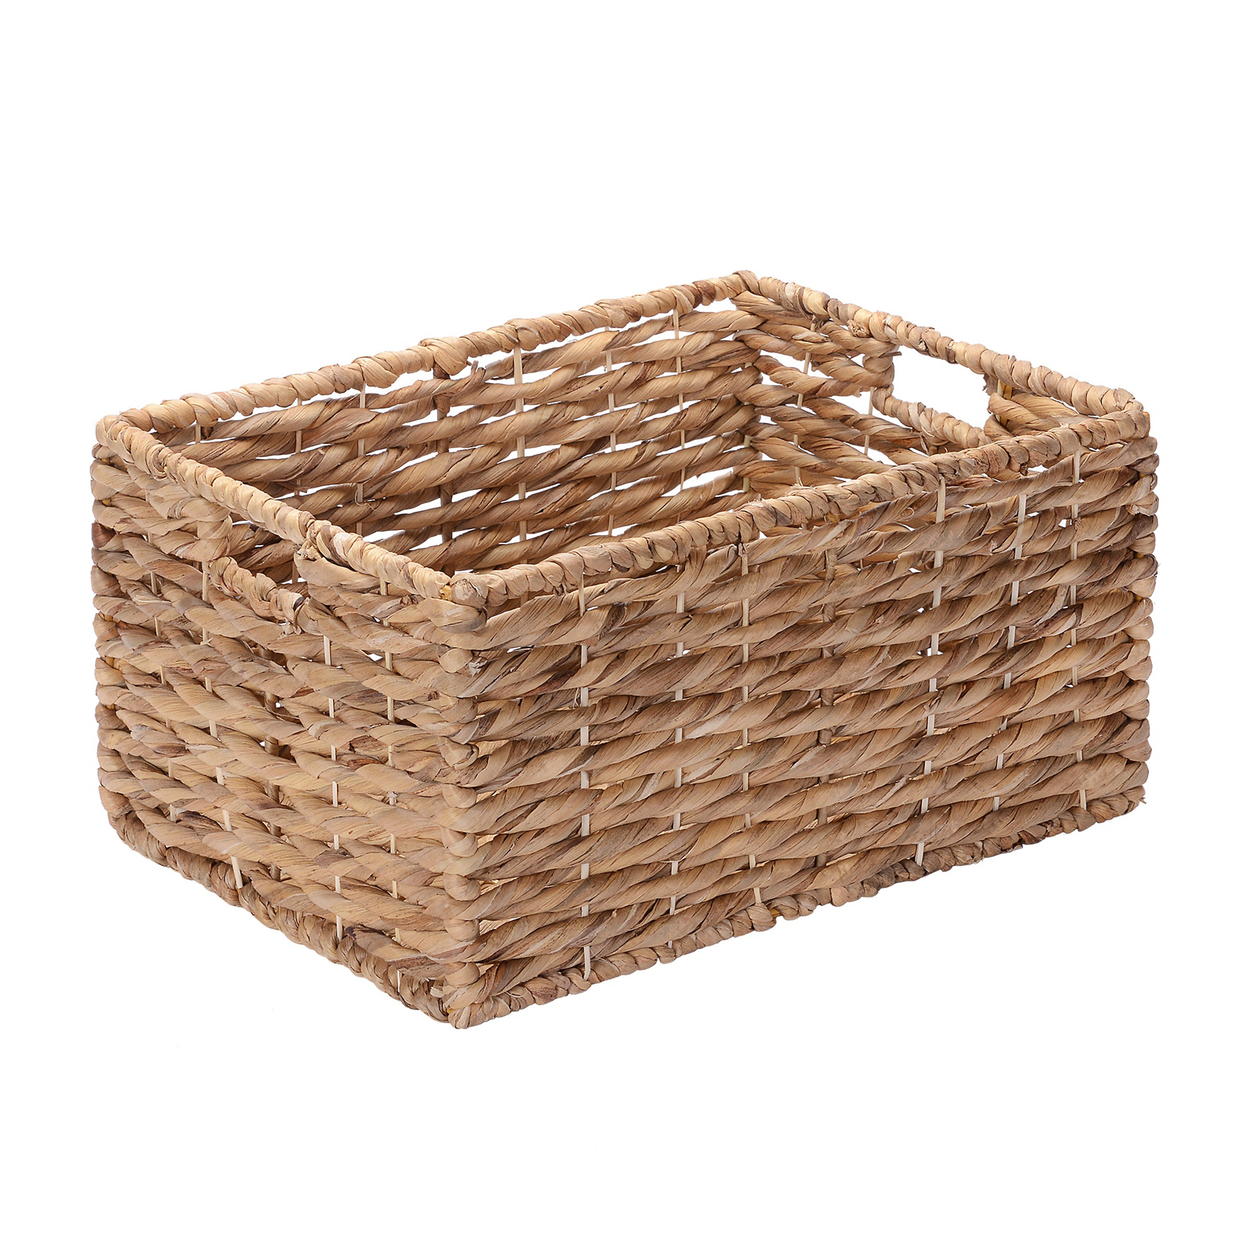 2 Set Handmade Wicker Baskets Nesting Seagrass Storage Bins W/ Handles, Natural